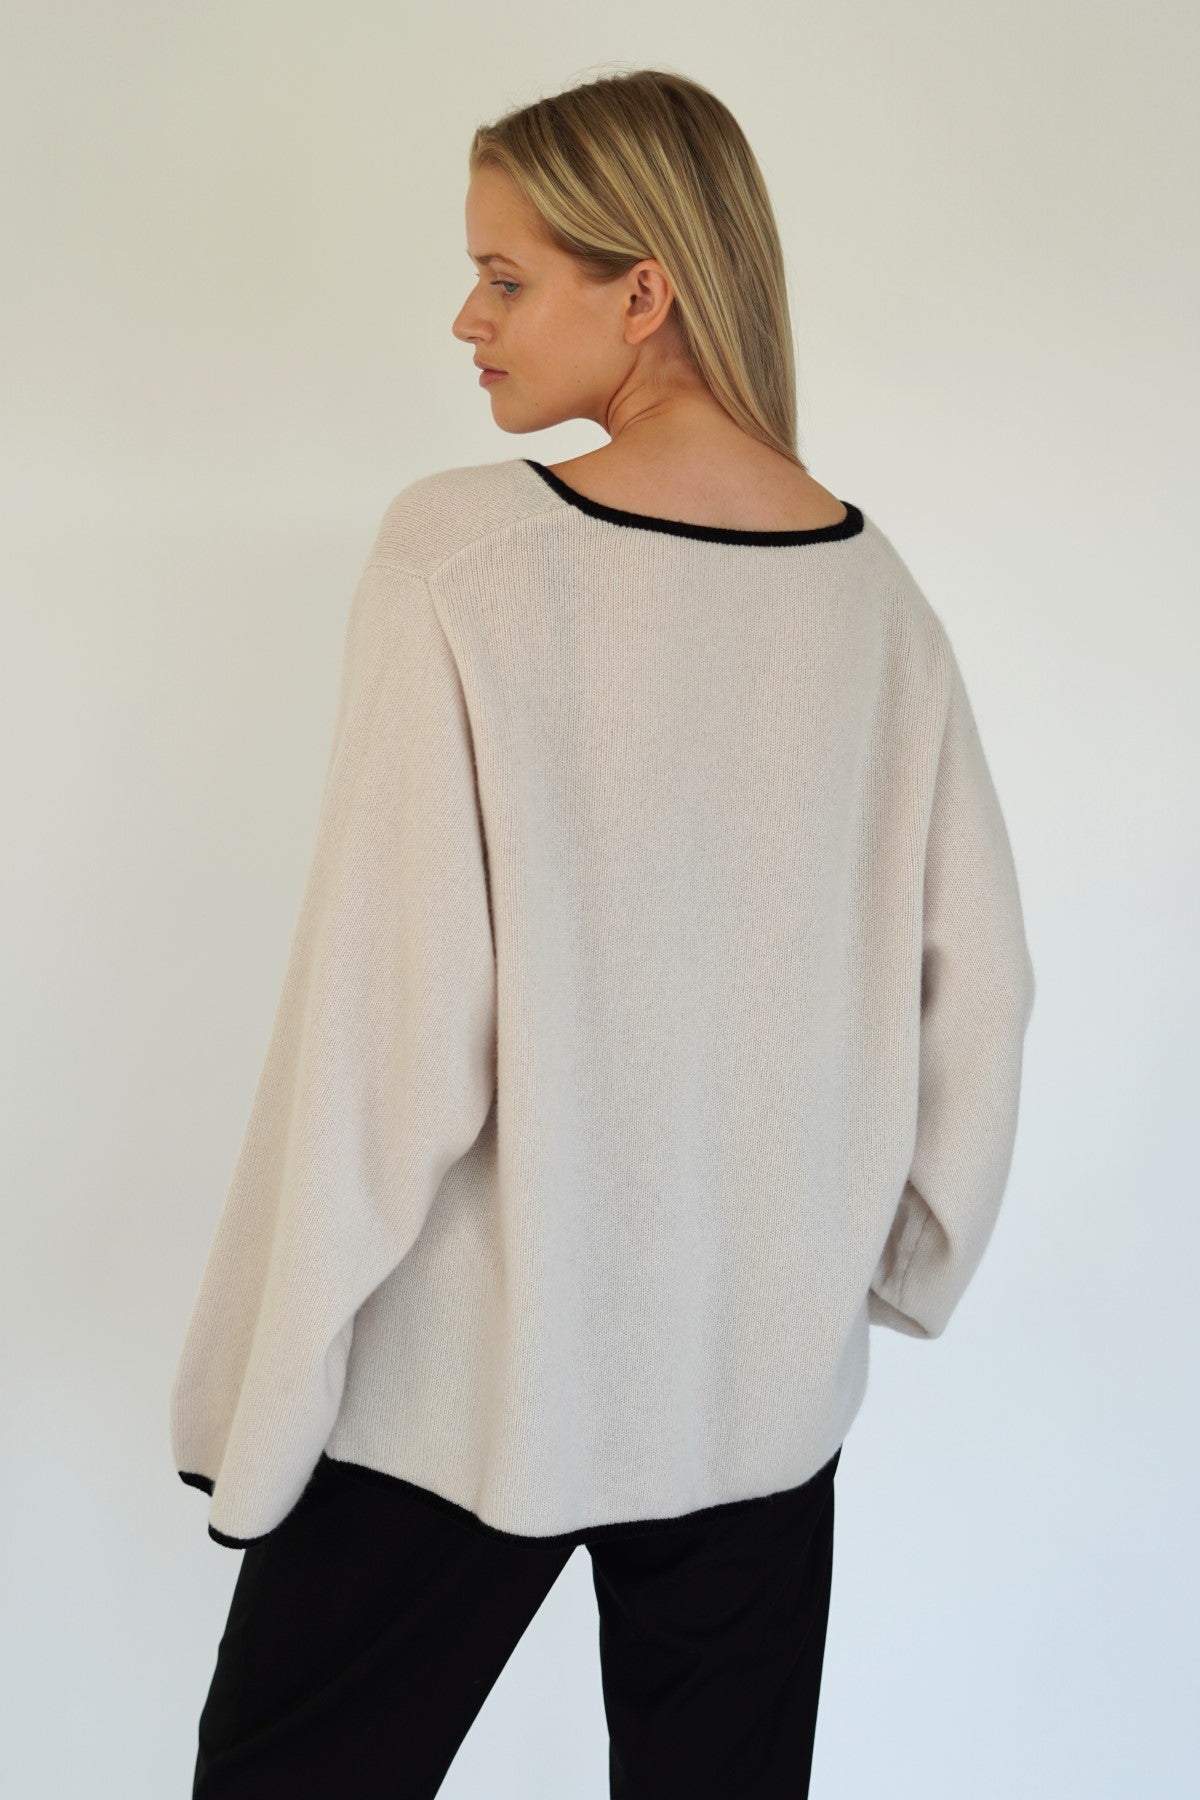 Cashmere sweater black edges